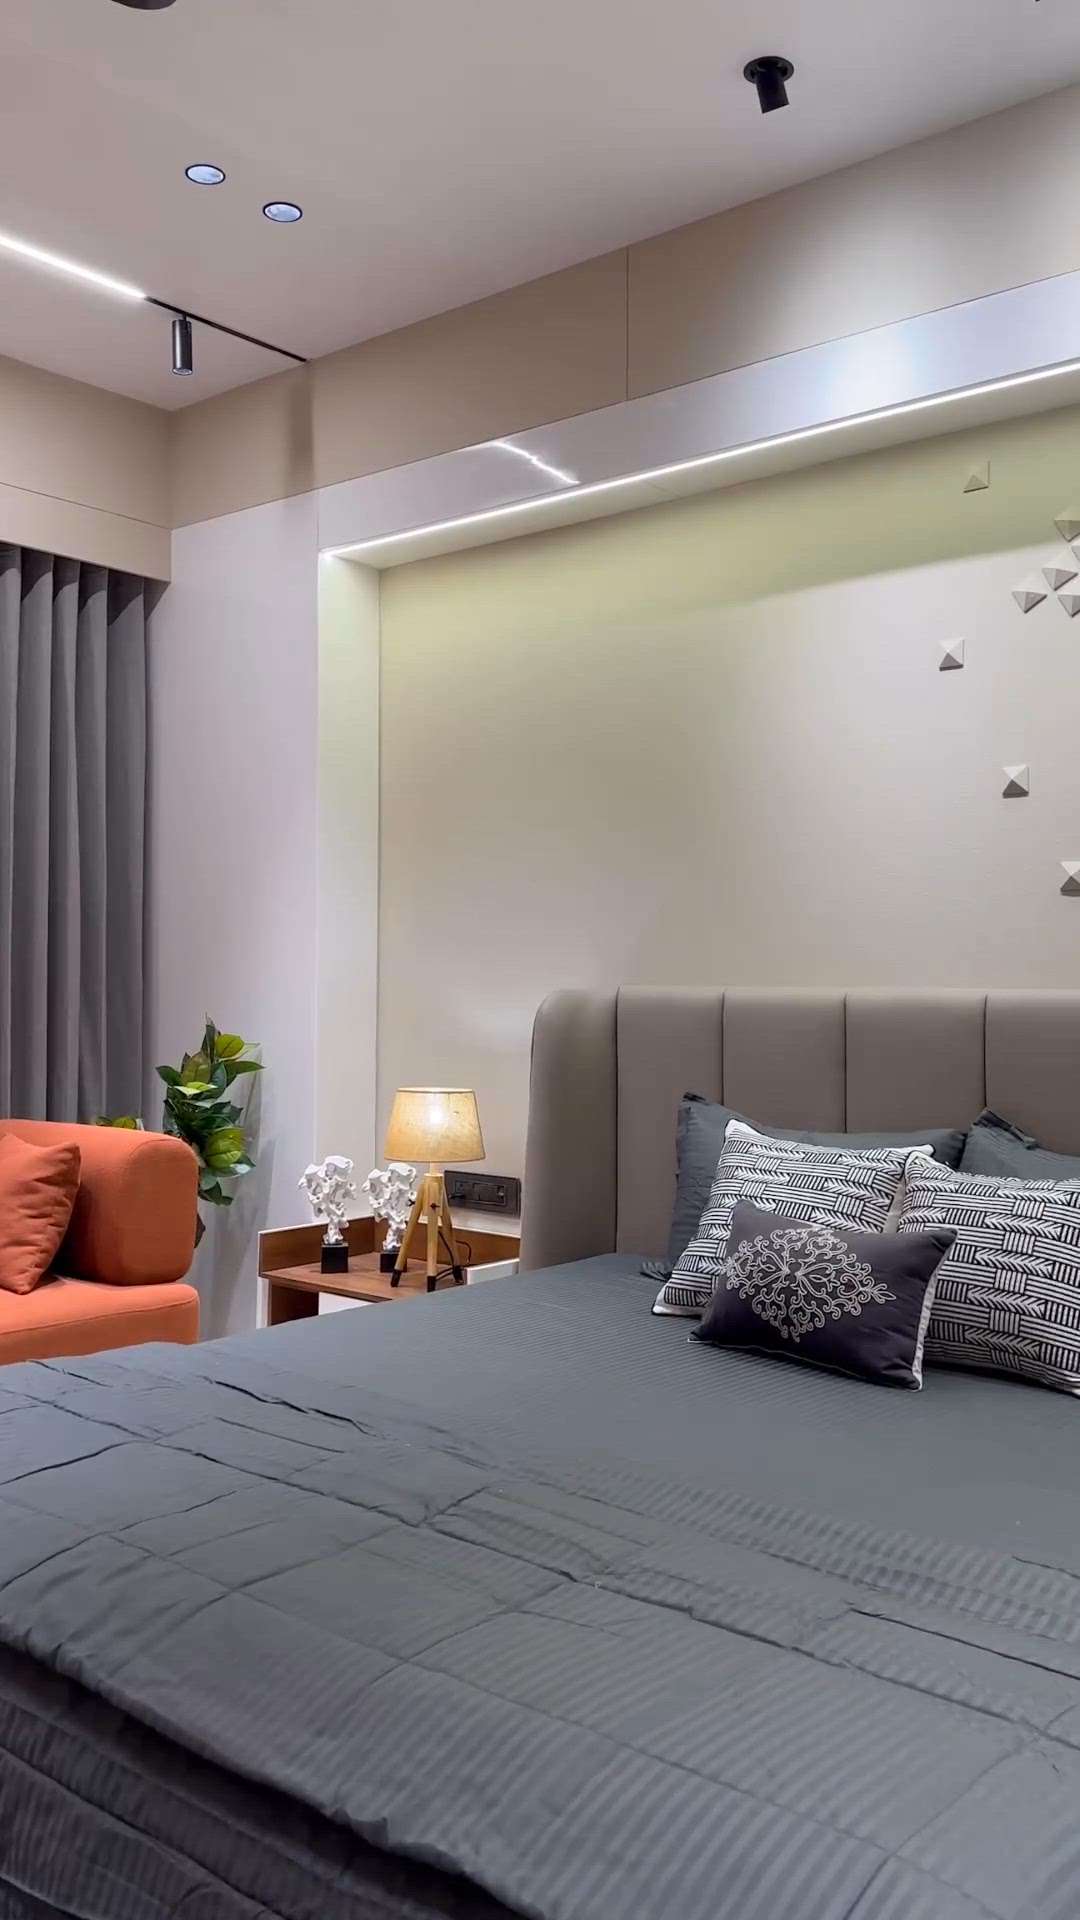 Bedroom outlet 🤘🤘
+91 9785593022,7891166876
.
.
.
#reflexinterior #bedroom #bedroomdesign #Architecture #InteriorDesign #DesignInspiration #ArchitecturalDigest #InstaArchitecture #Interiors #ArchitectsOfInstagram #DesignGoals #InteriorInspiration #DreamHome #ModernArchitecture #HomeDecor #ArchitectureLovers #InteriorDesignIdeas #Archilovers #HouseTour #DesignStudio #InteriorStyling #ArchDaily #HomeDesign #didwana